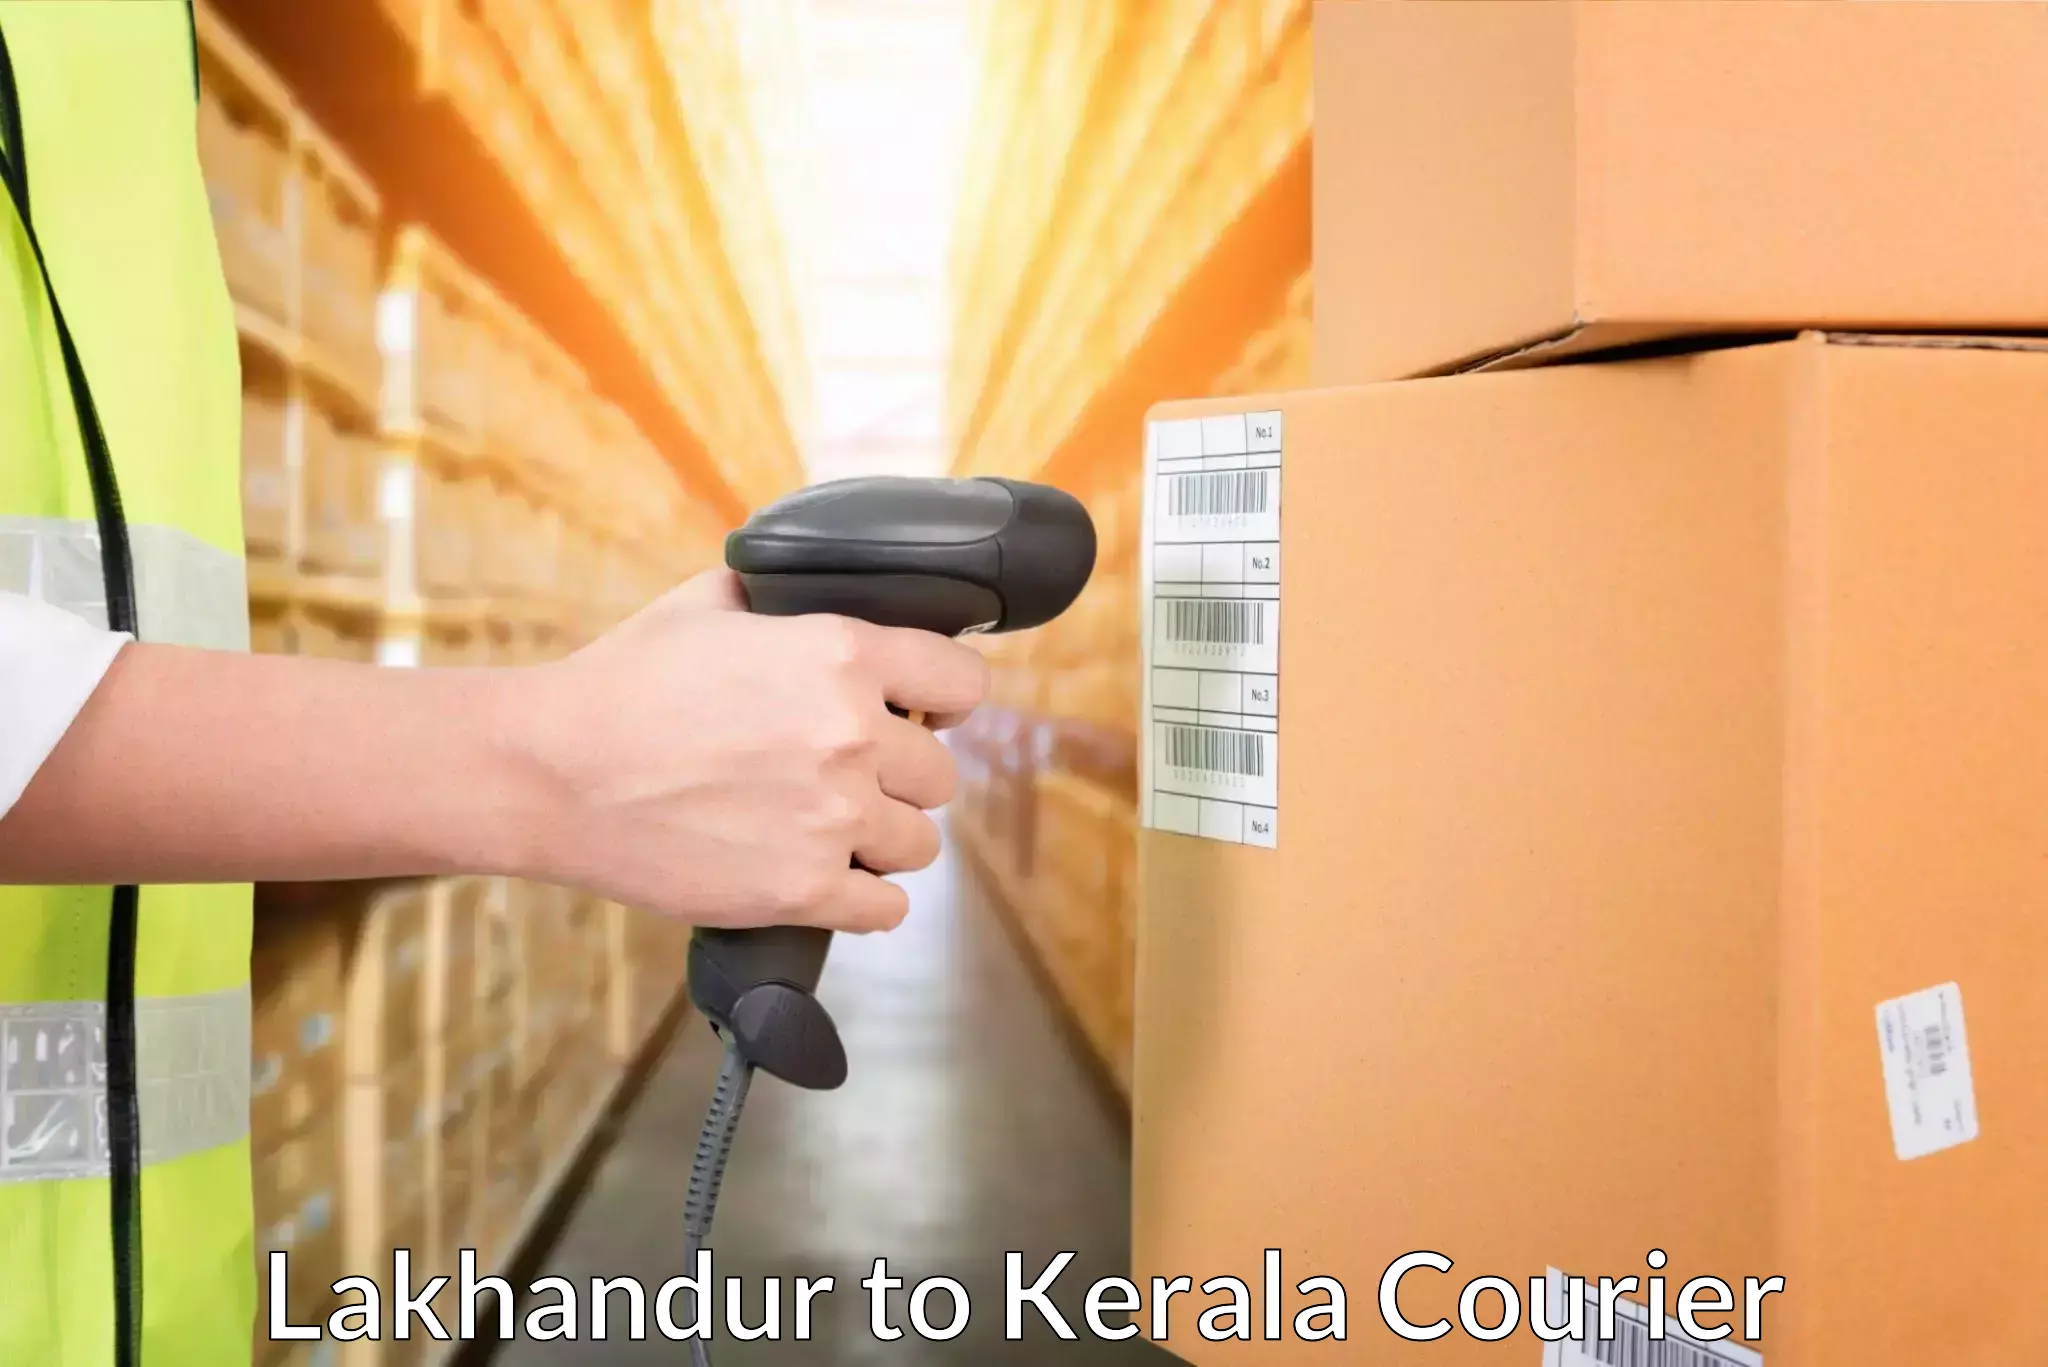 International parcel service Lakhandur to Thrissur